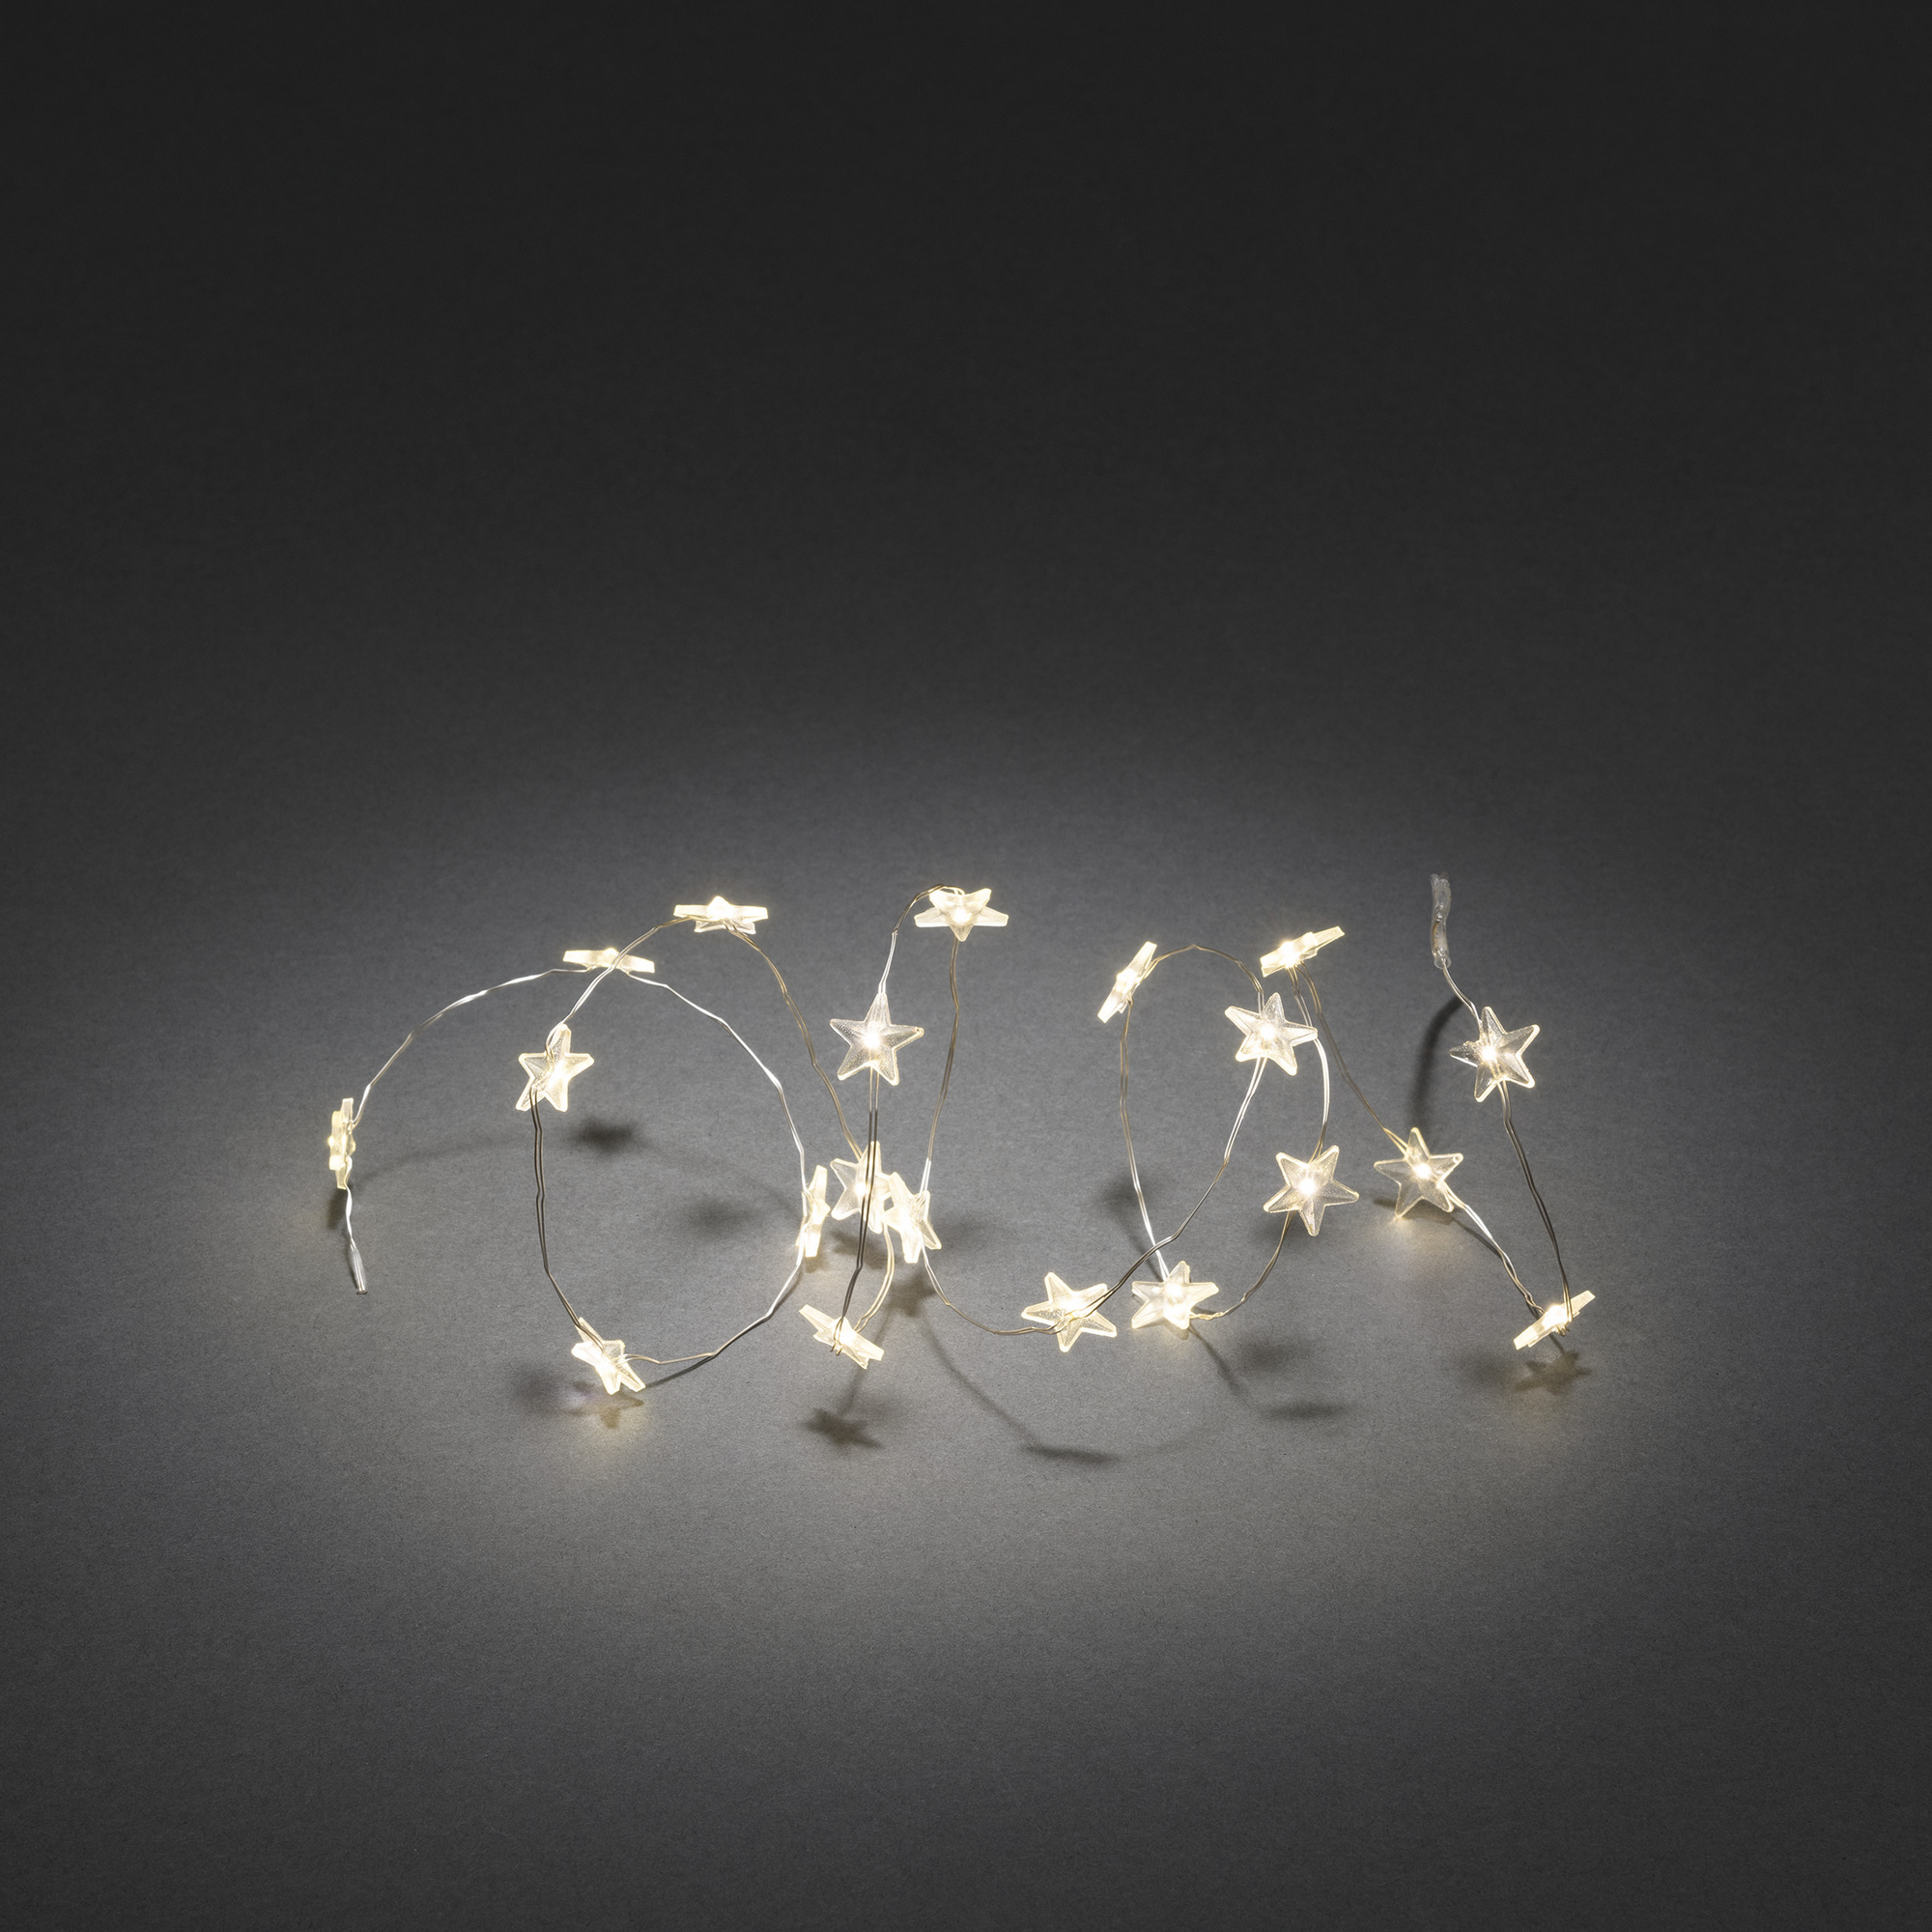 LED-Lichterkette 'Sterne' 40 LEDs warmweiß 210 cm